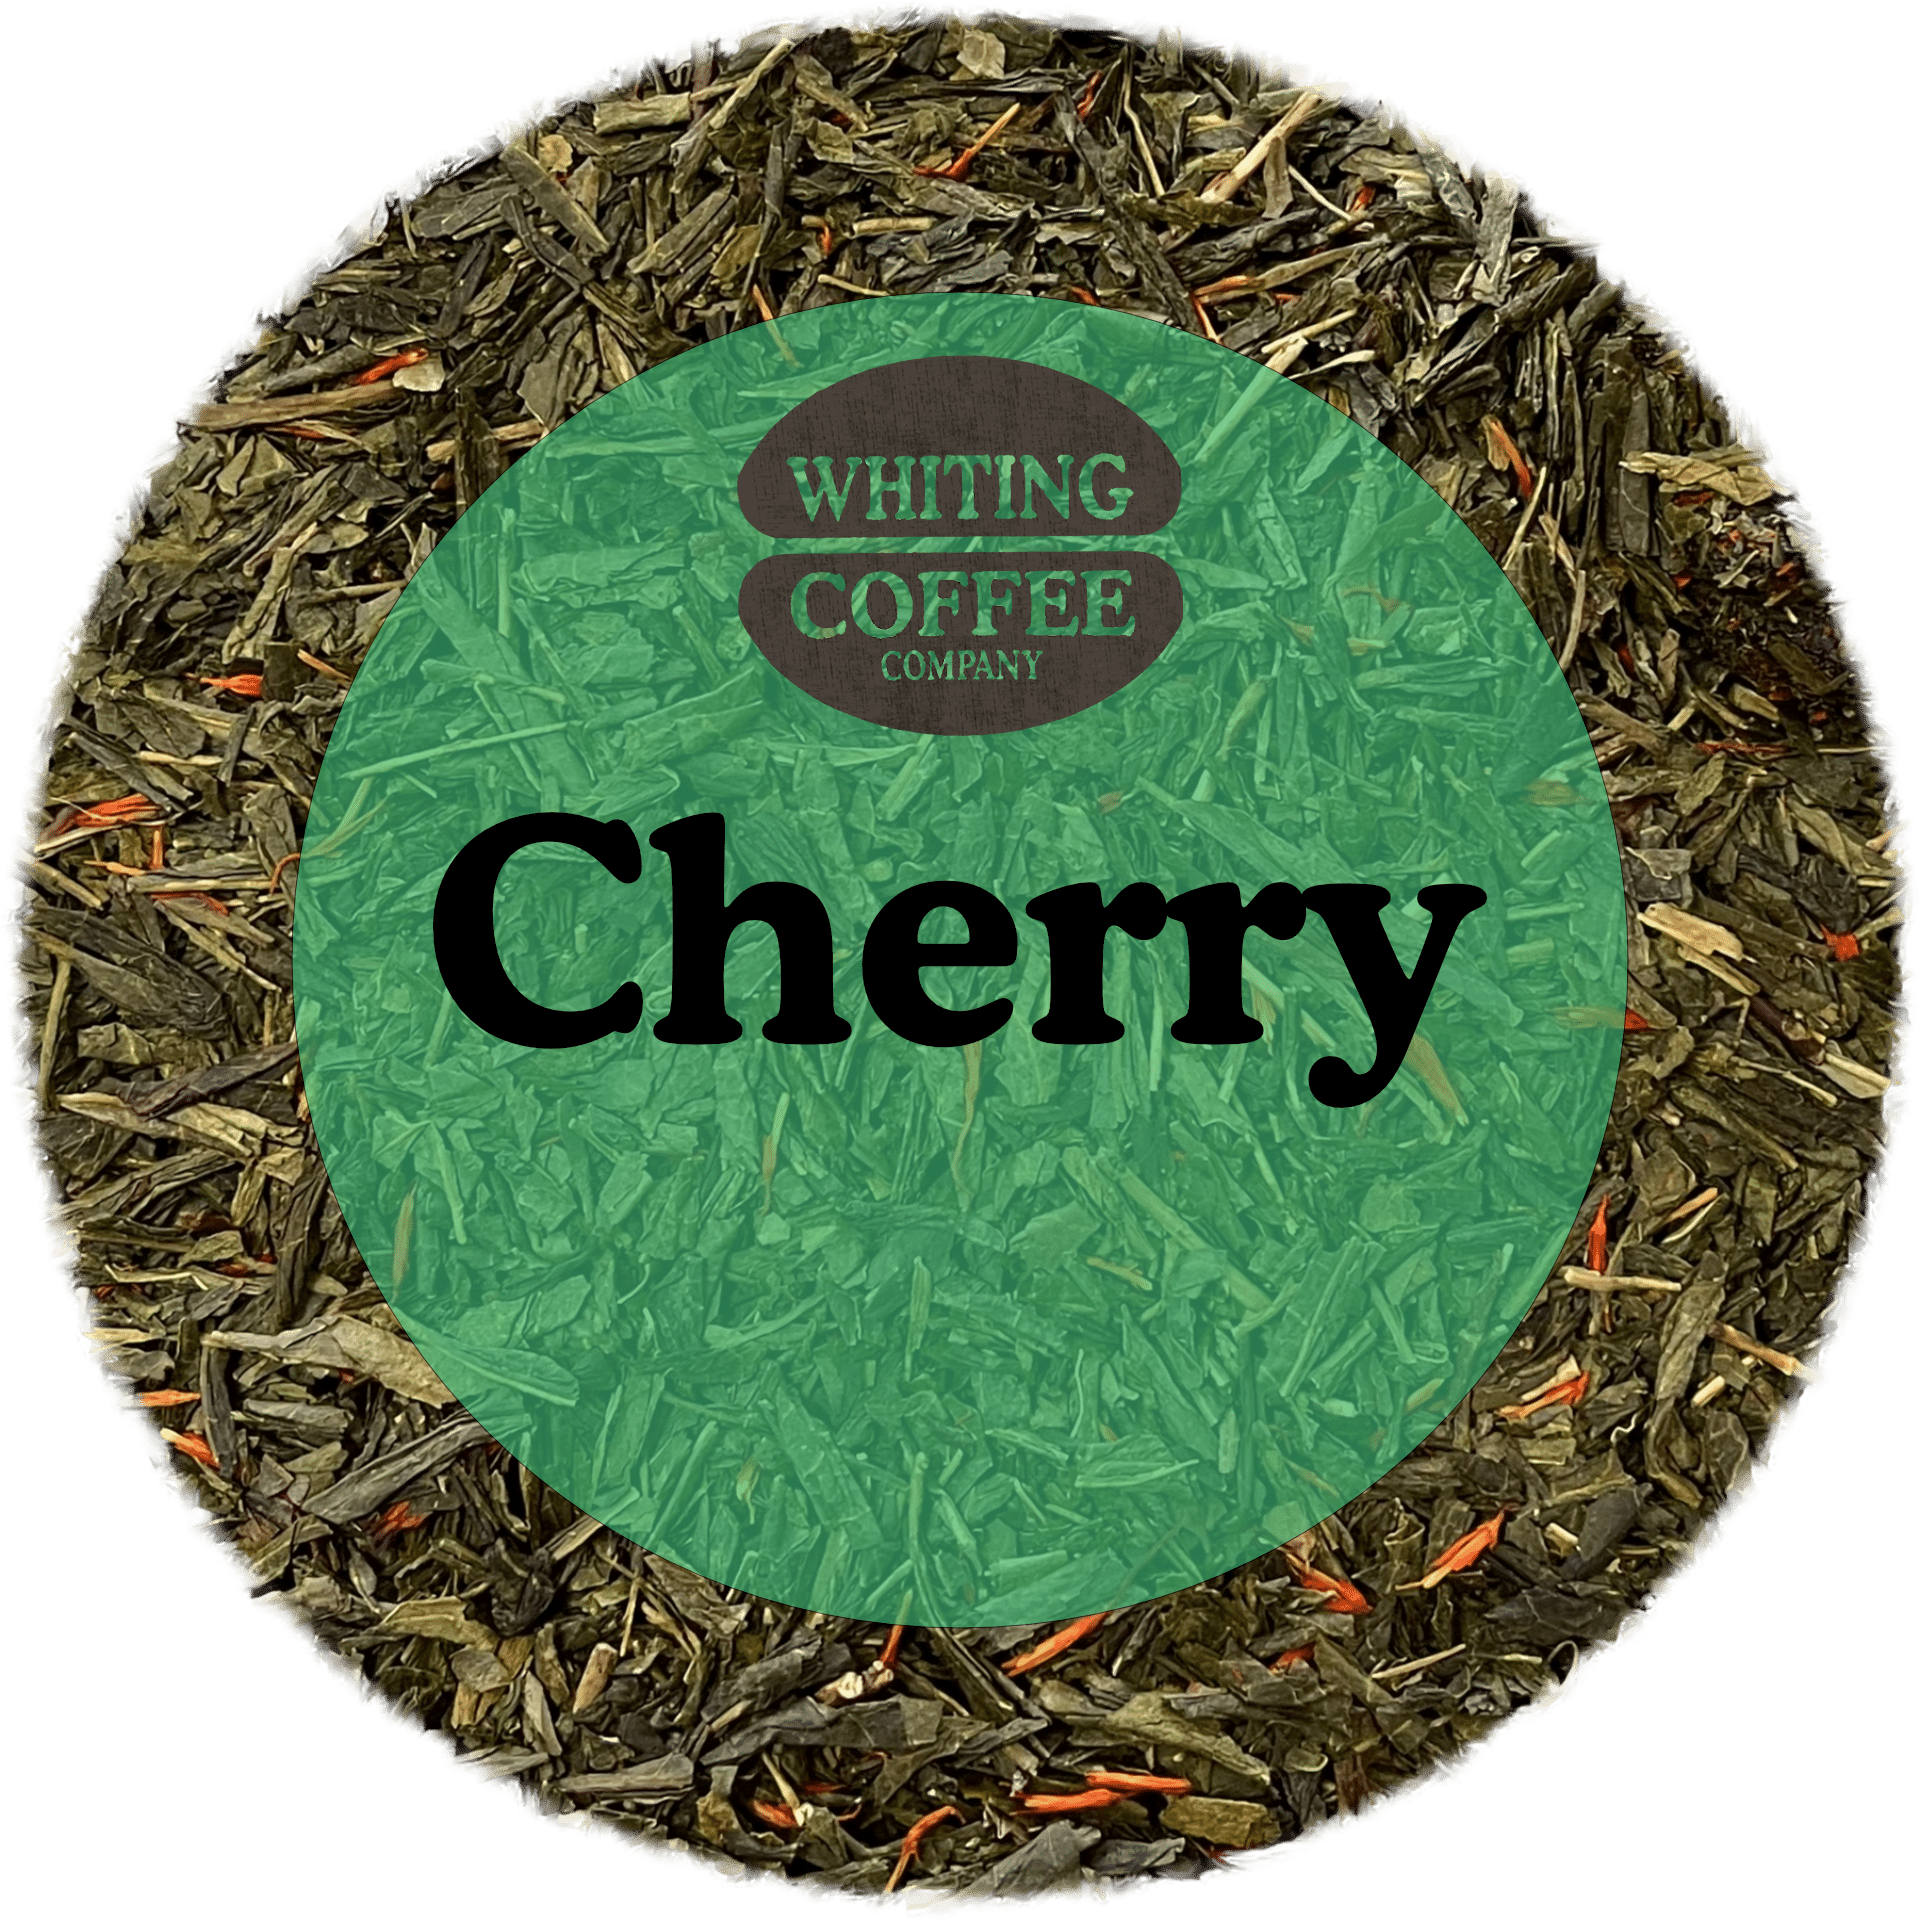 Cherry Green Tea